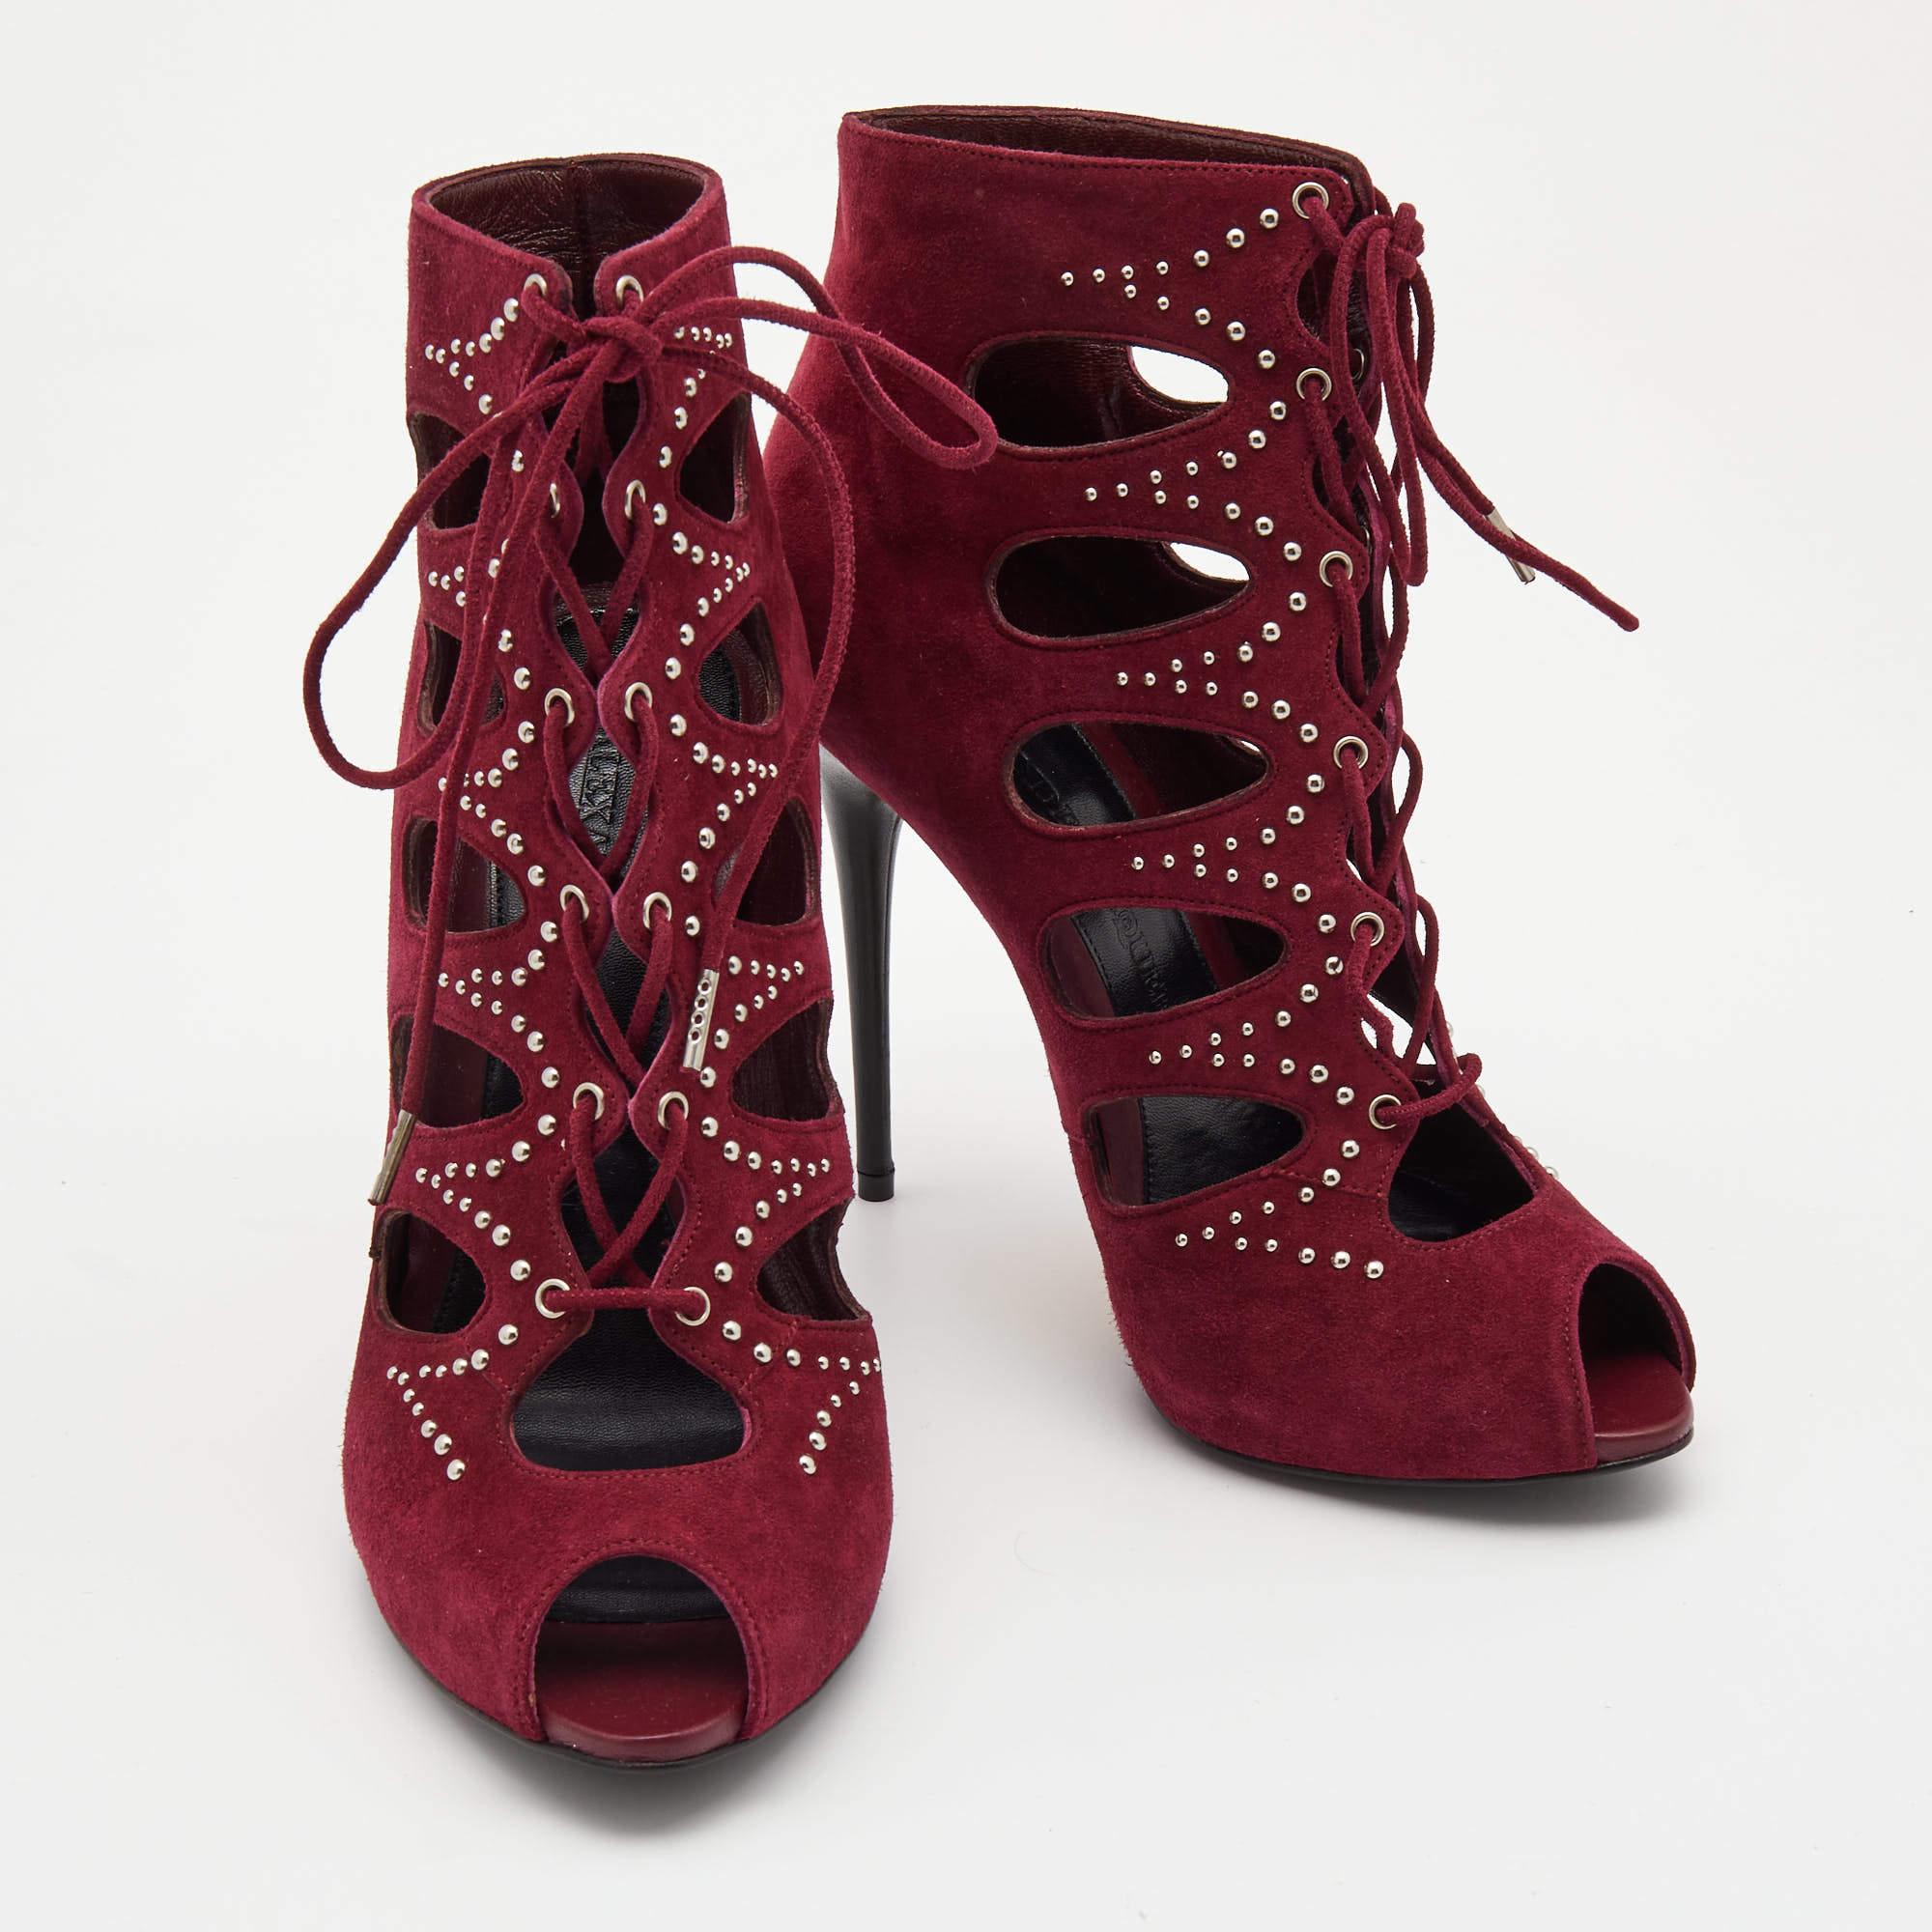 Women's Alexander McQueen Burgundy Suede Studded Caged Sandals Size 37